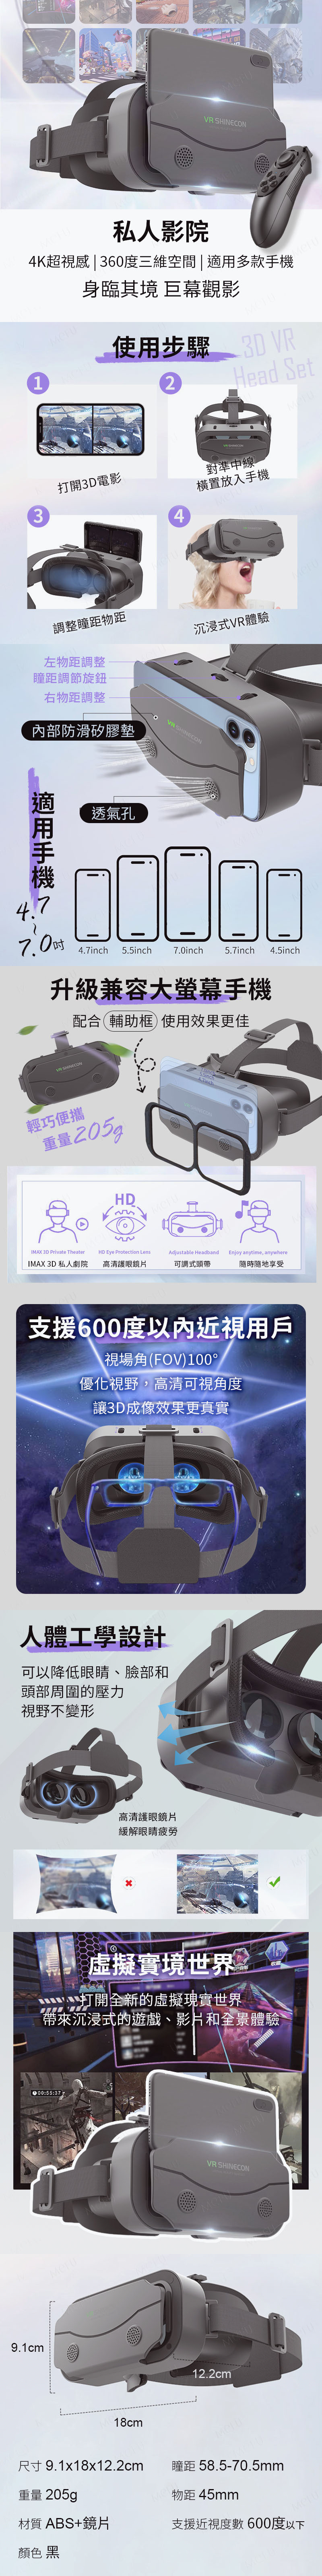 G13千幻魔鏡VR眼鏡